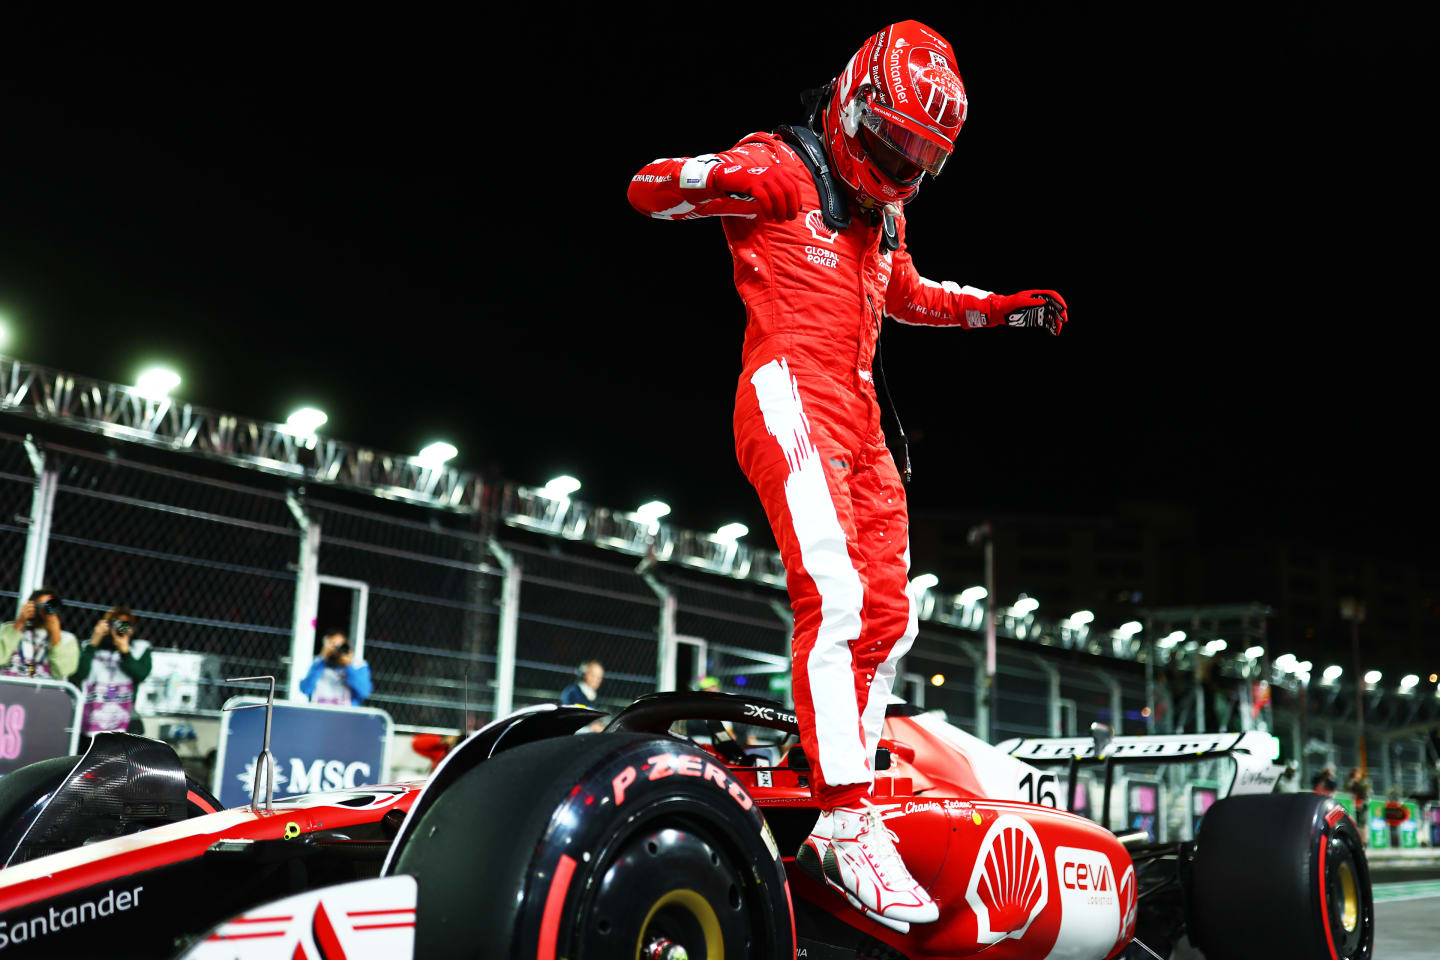 LAS VEGAS, NEVADA - NOVEMBER 18: Pole position qualifier Charles Leclerc of Monaco and Ferrari